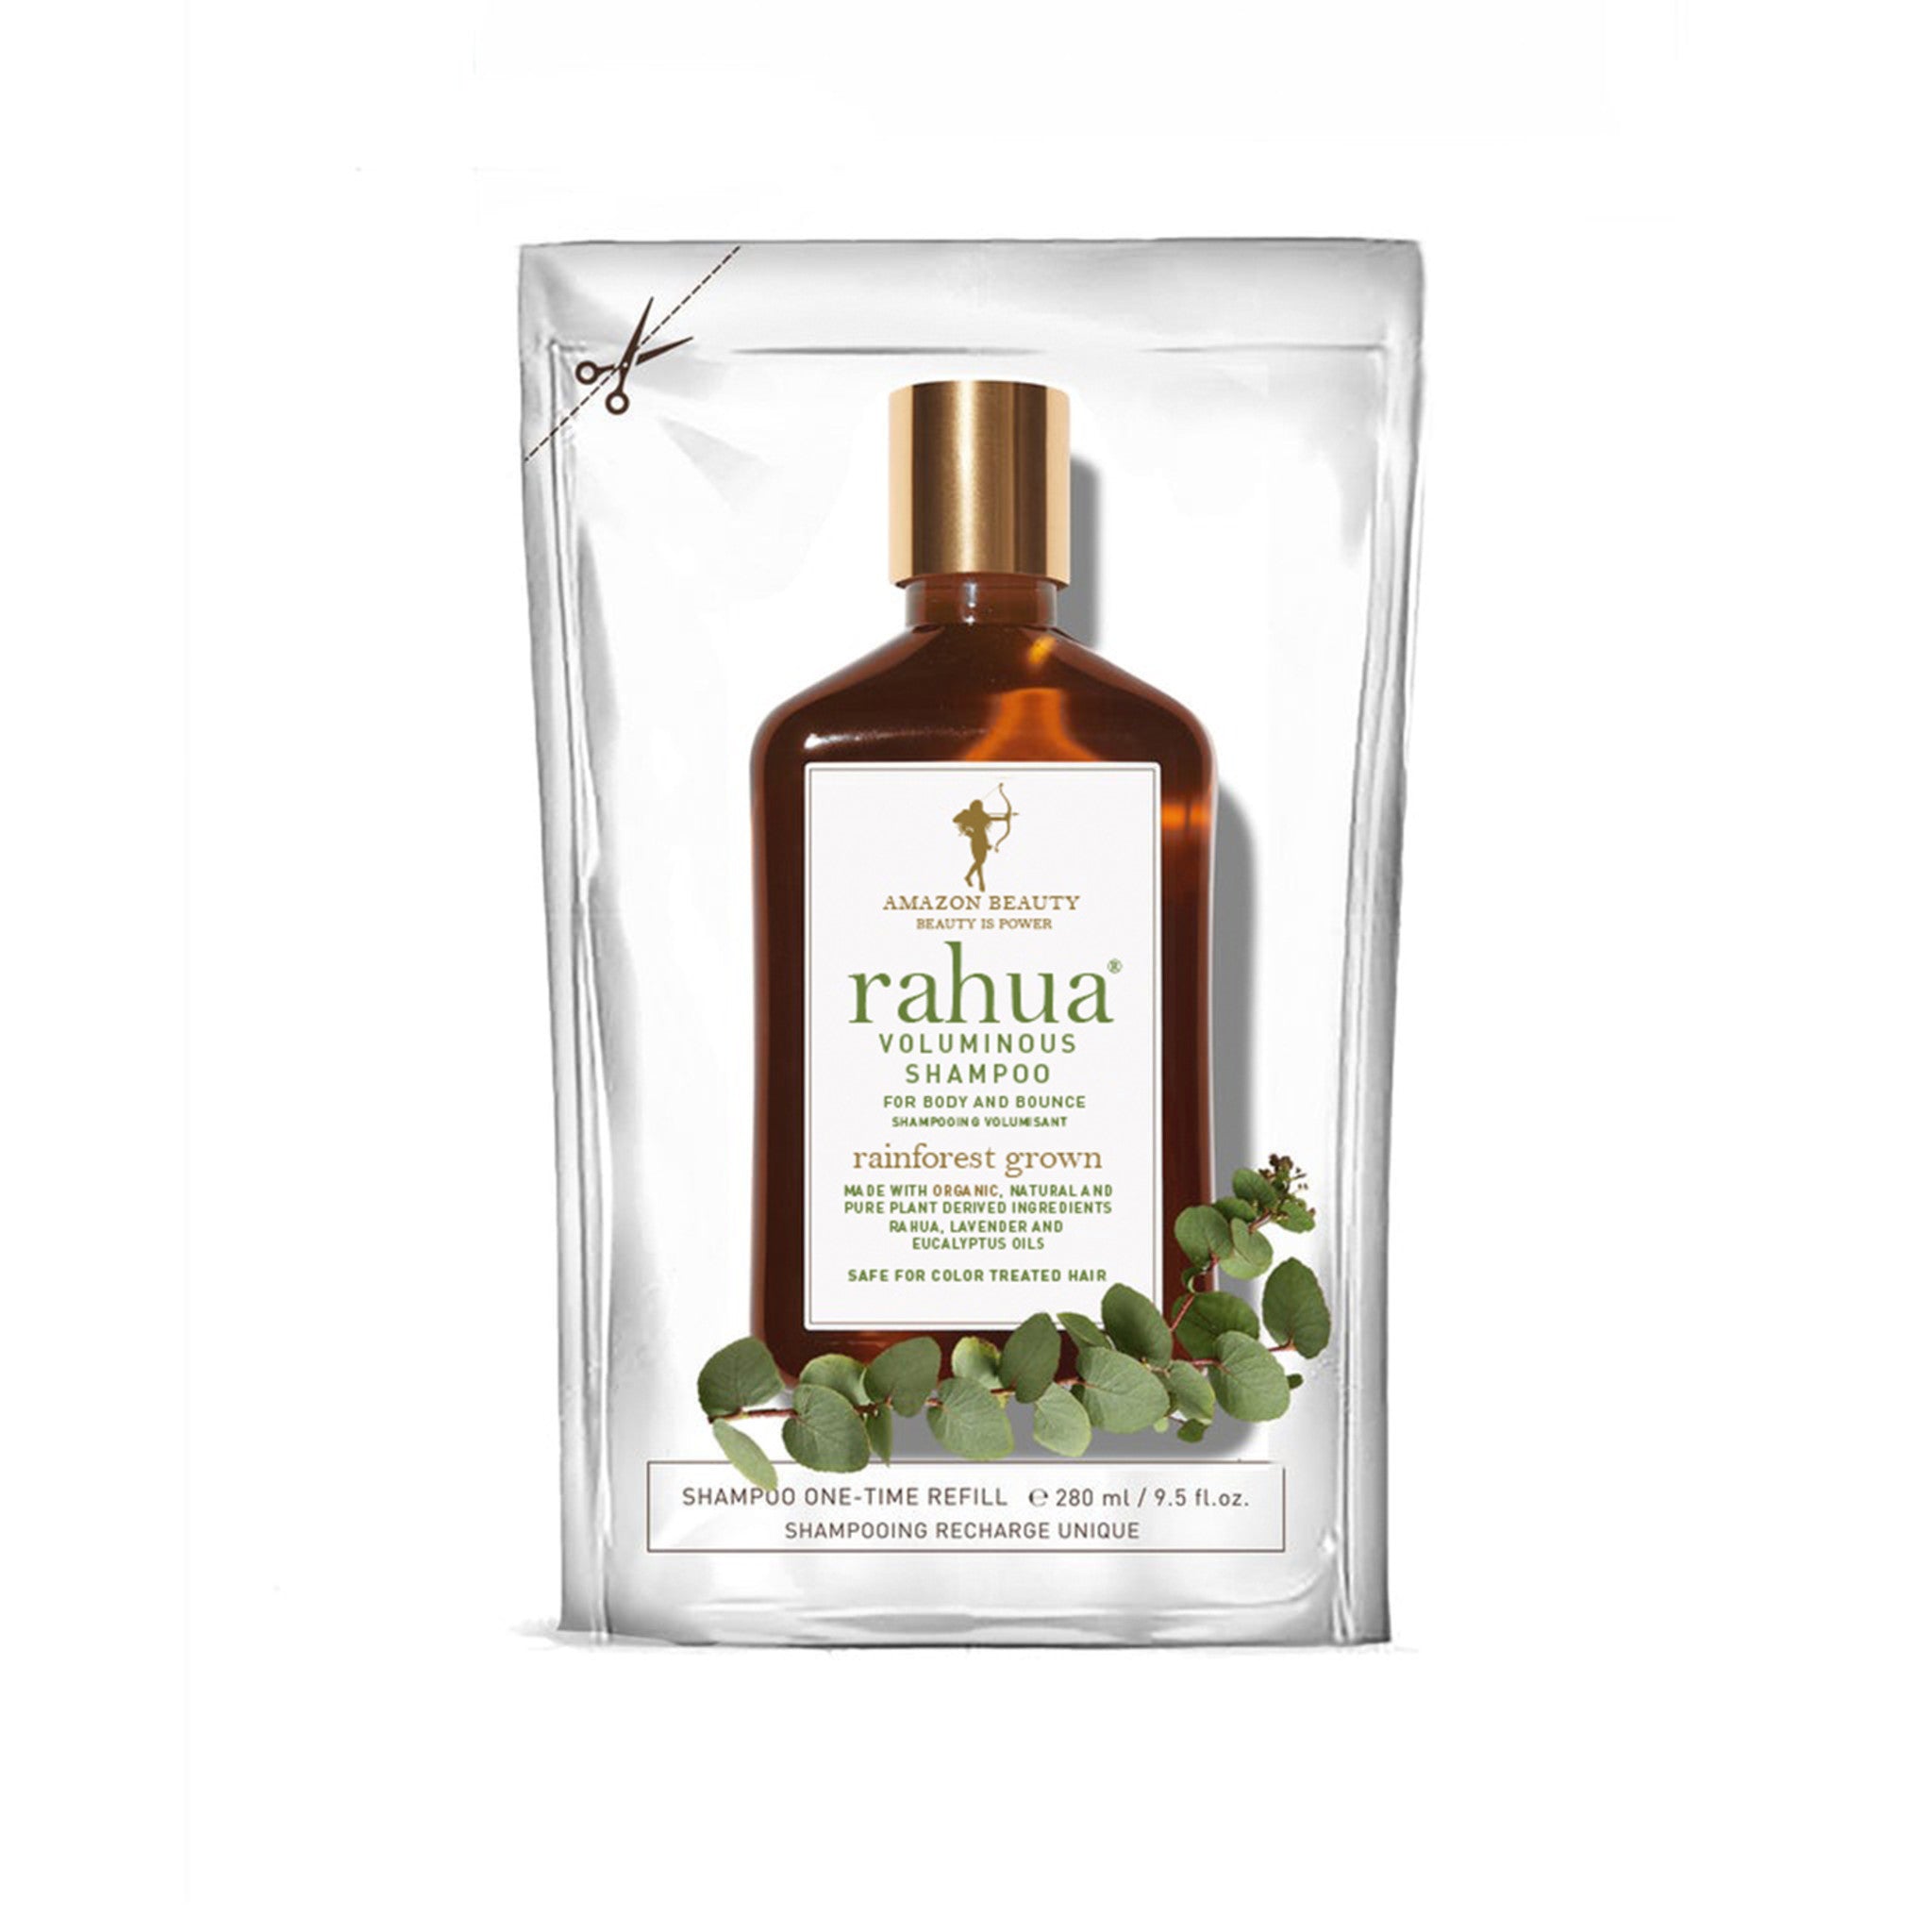 Rahua Voluminous Shampoo Refill main image.